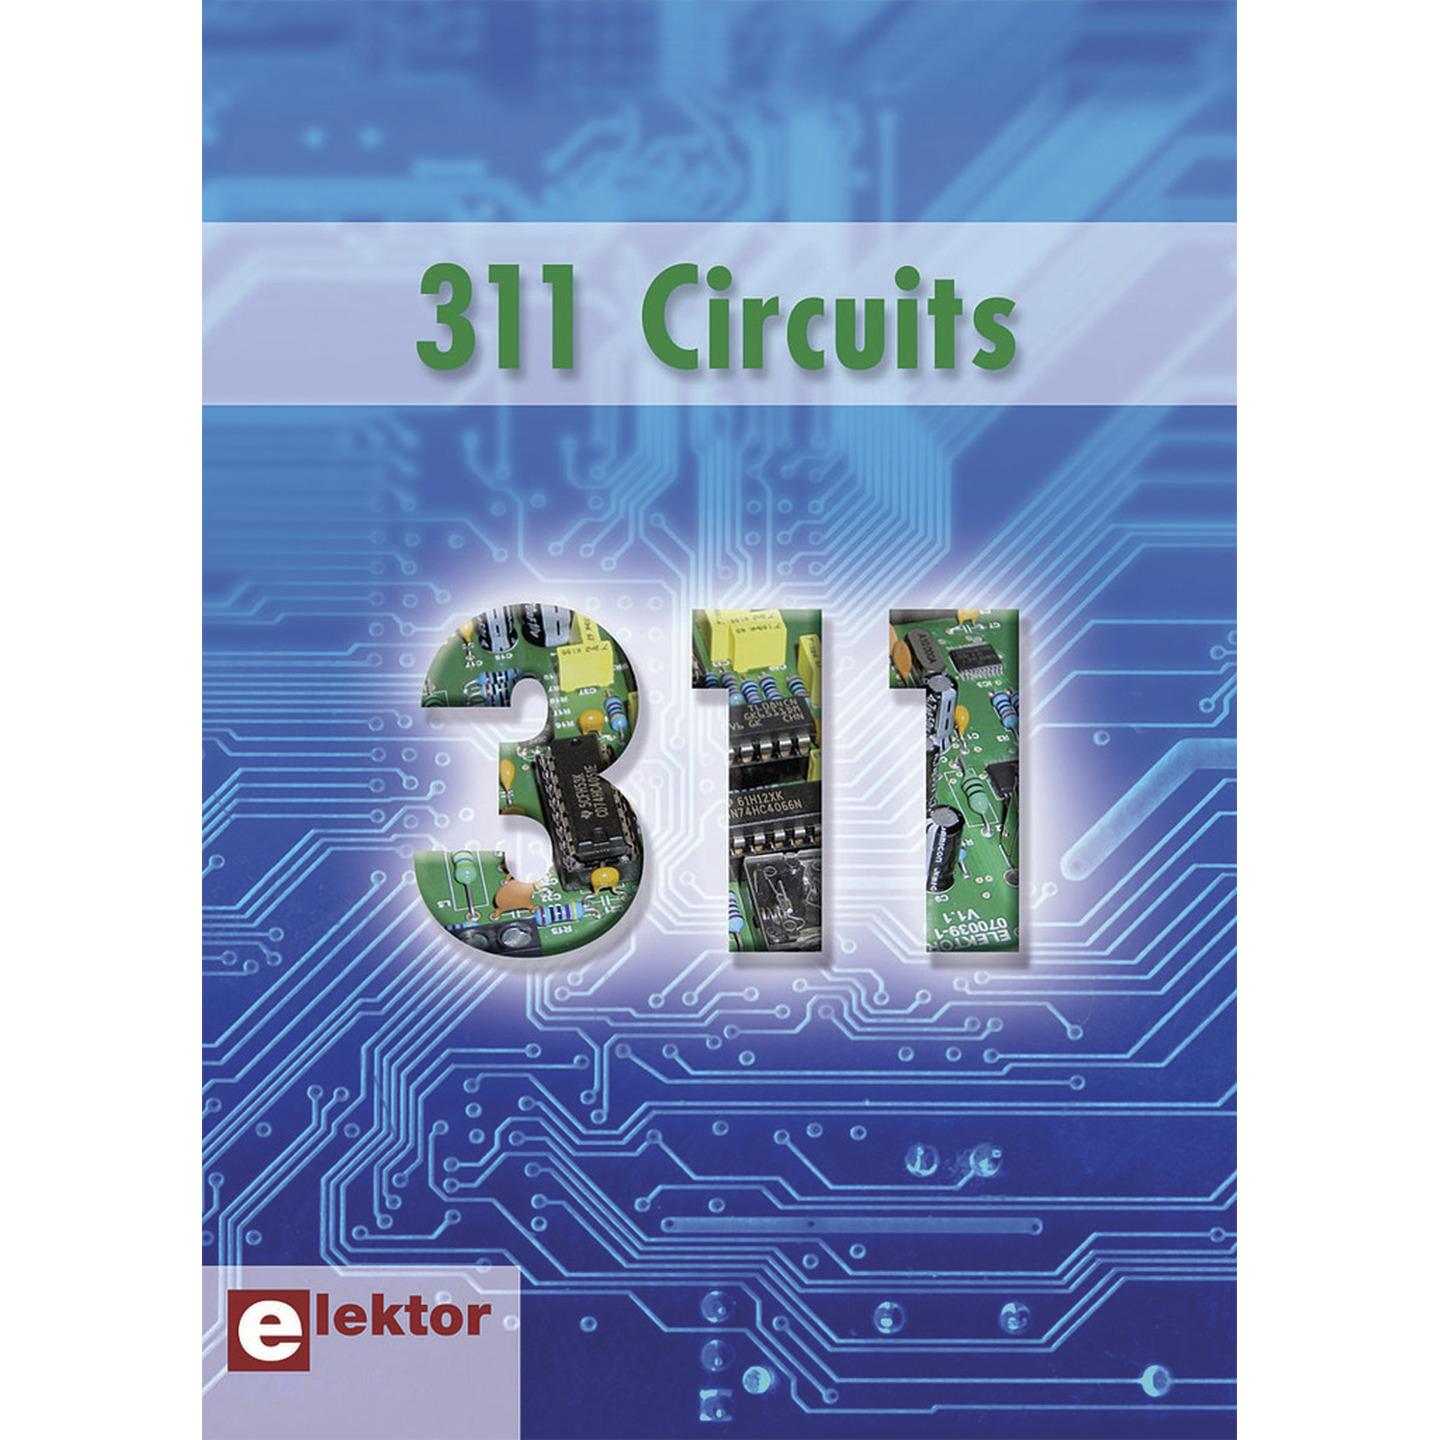 311 Circuits